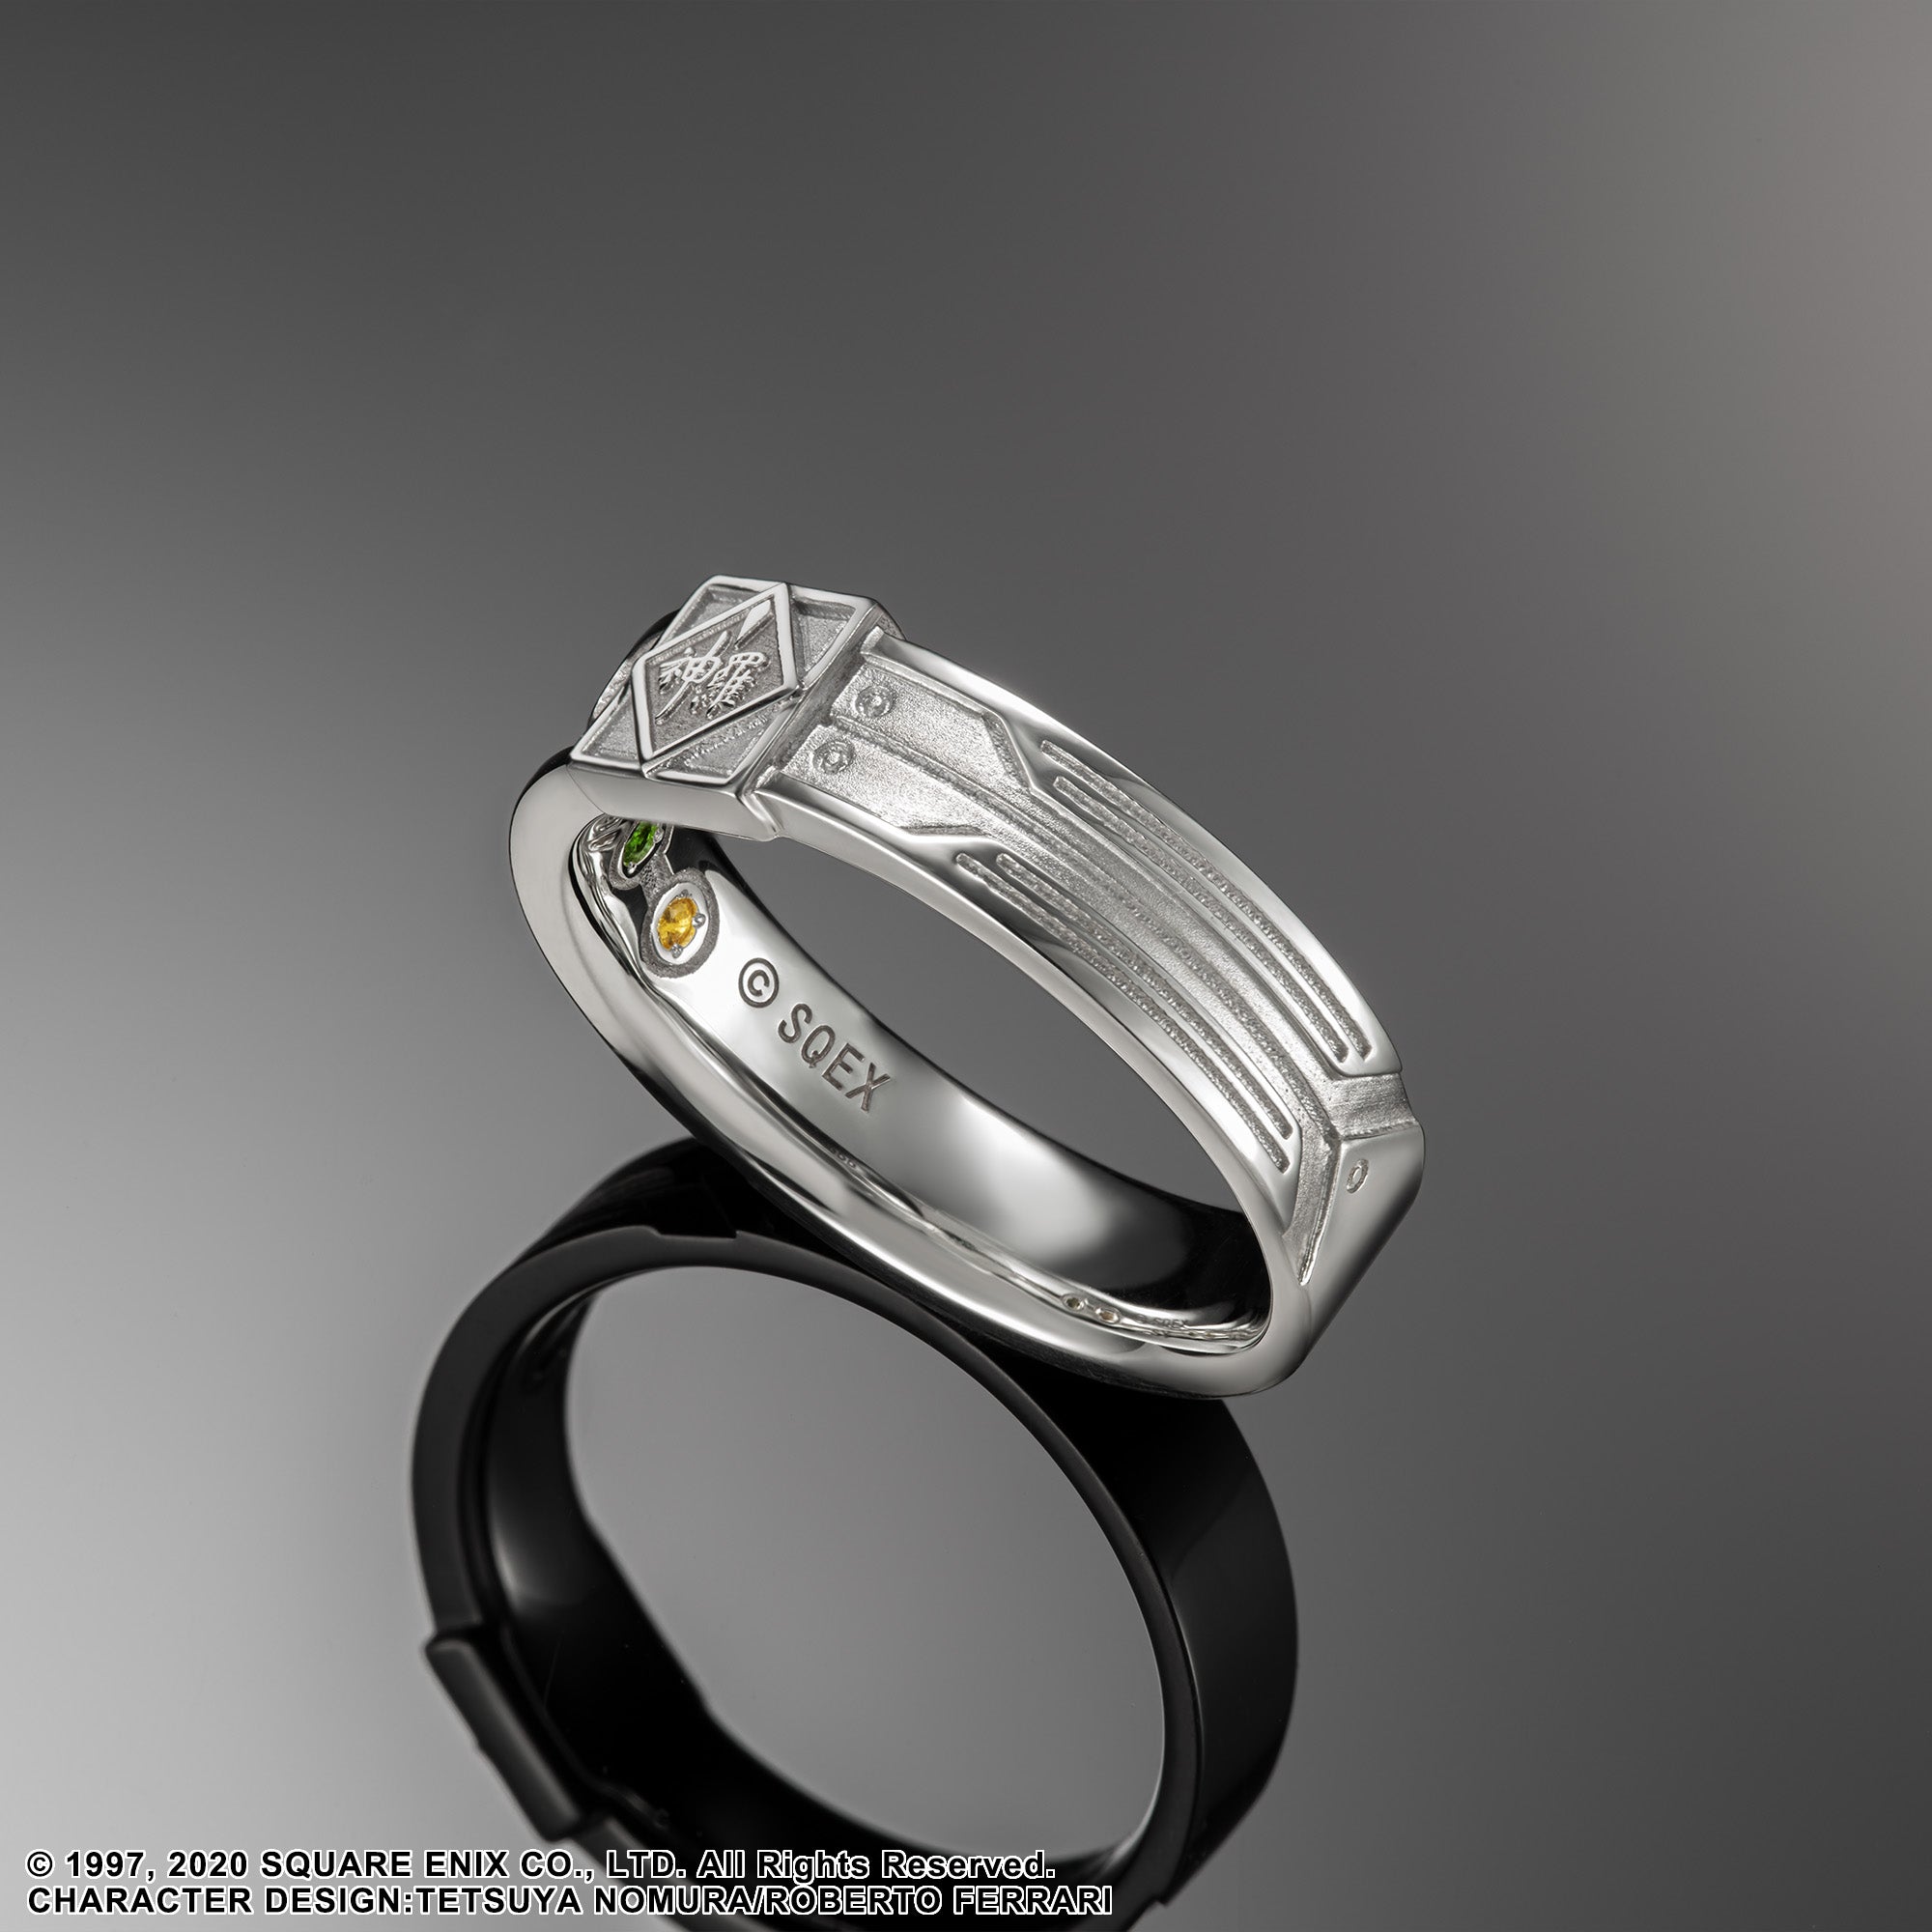 FINAL FANTASY VII Silver Ring SHINRA MATERIA TYPE A (Emerald + Blue Sapphire) Size 13